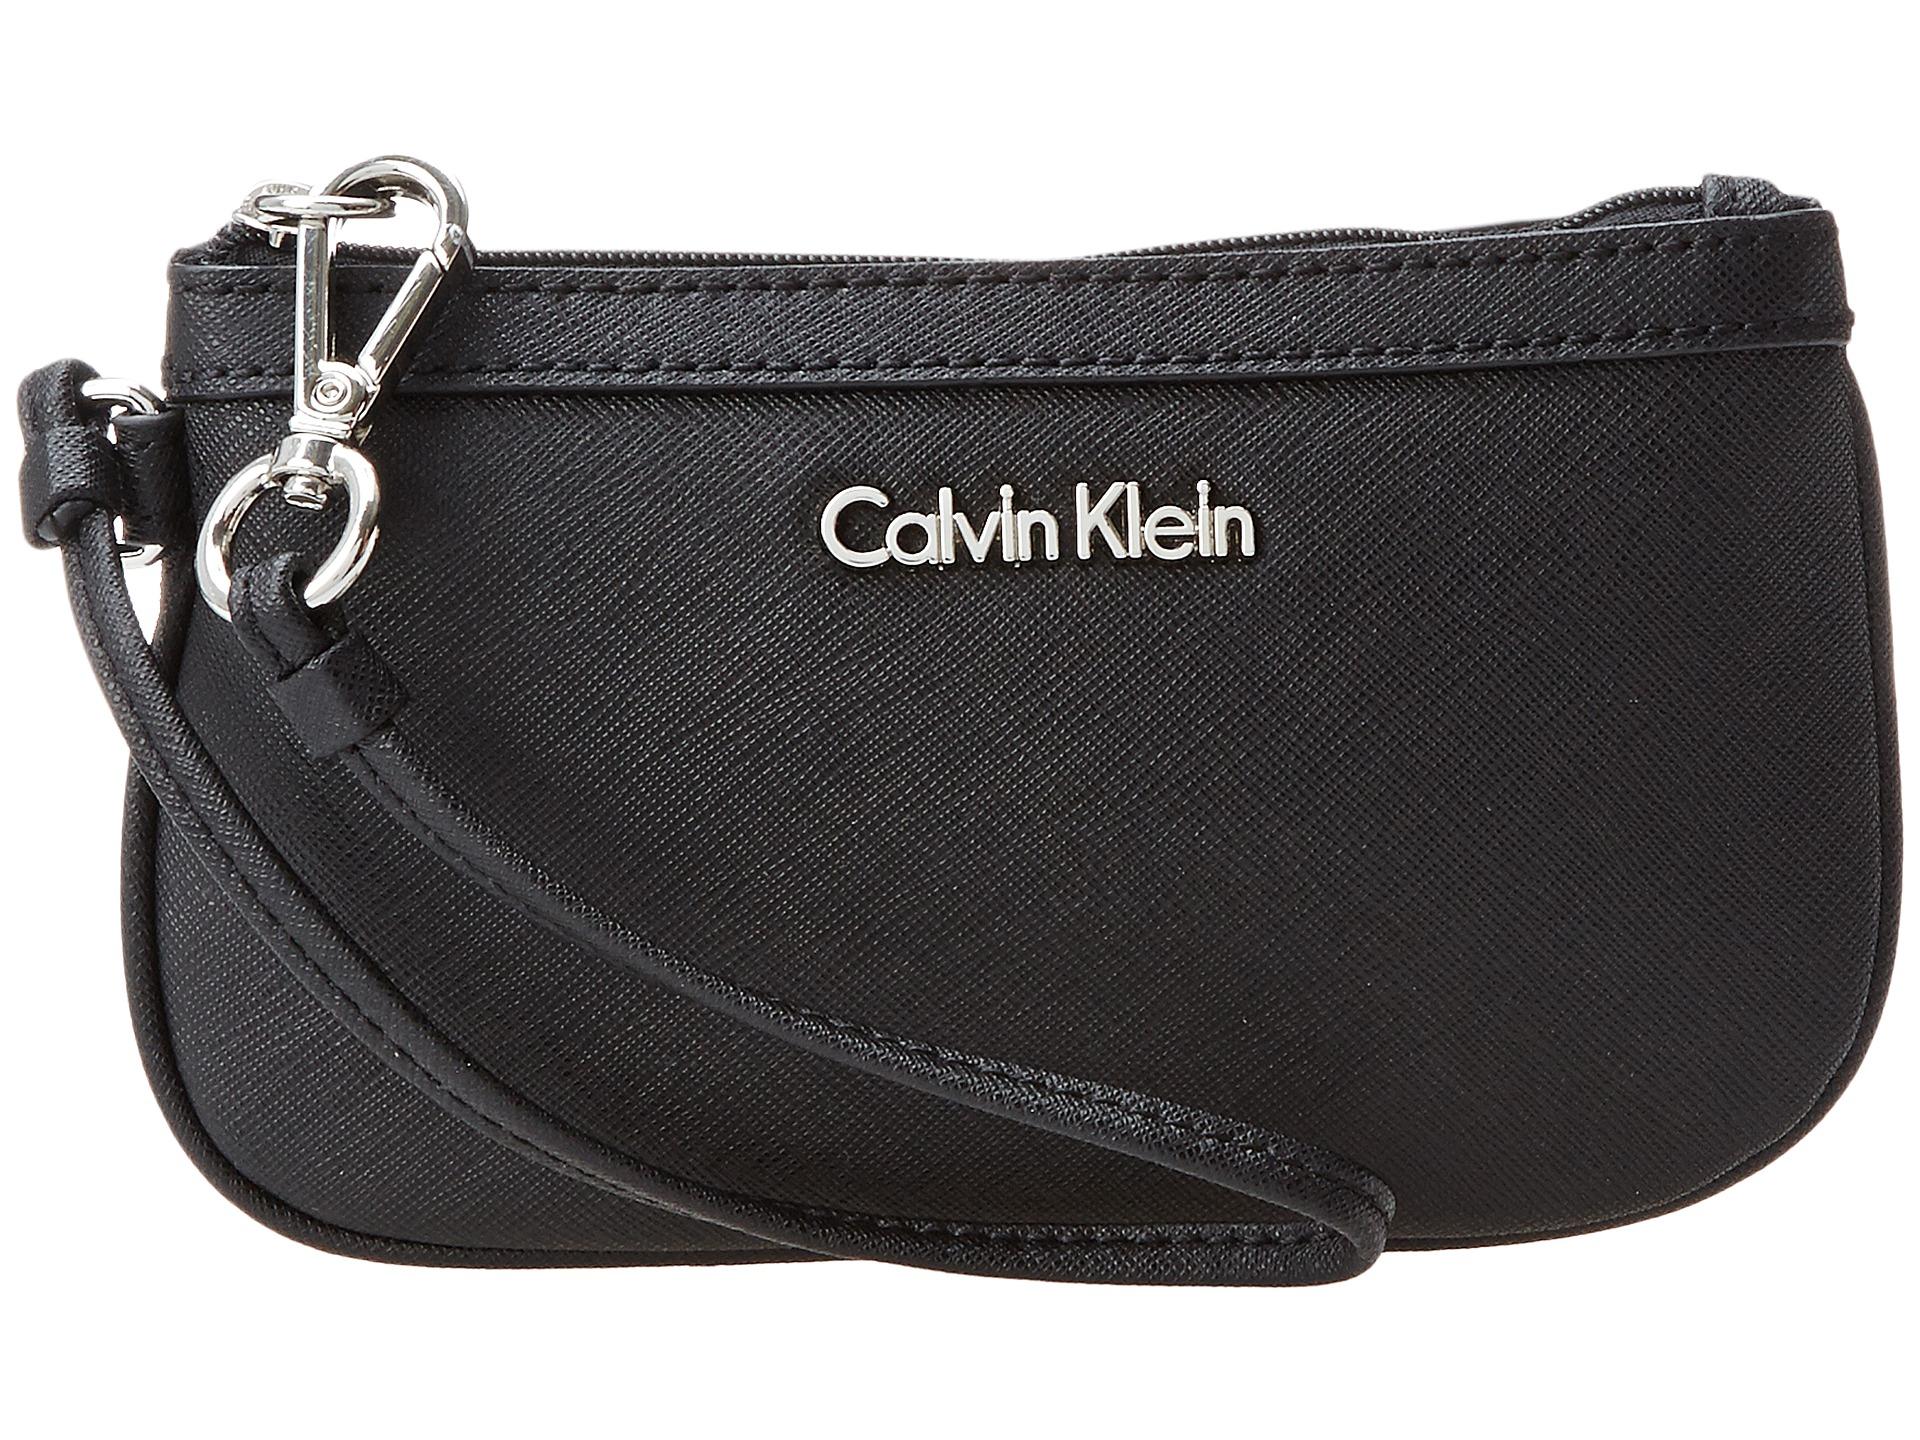 calvin klein wristlet pouch